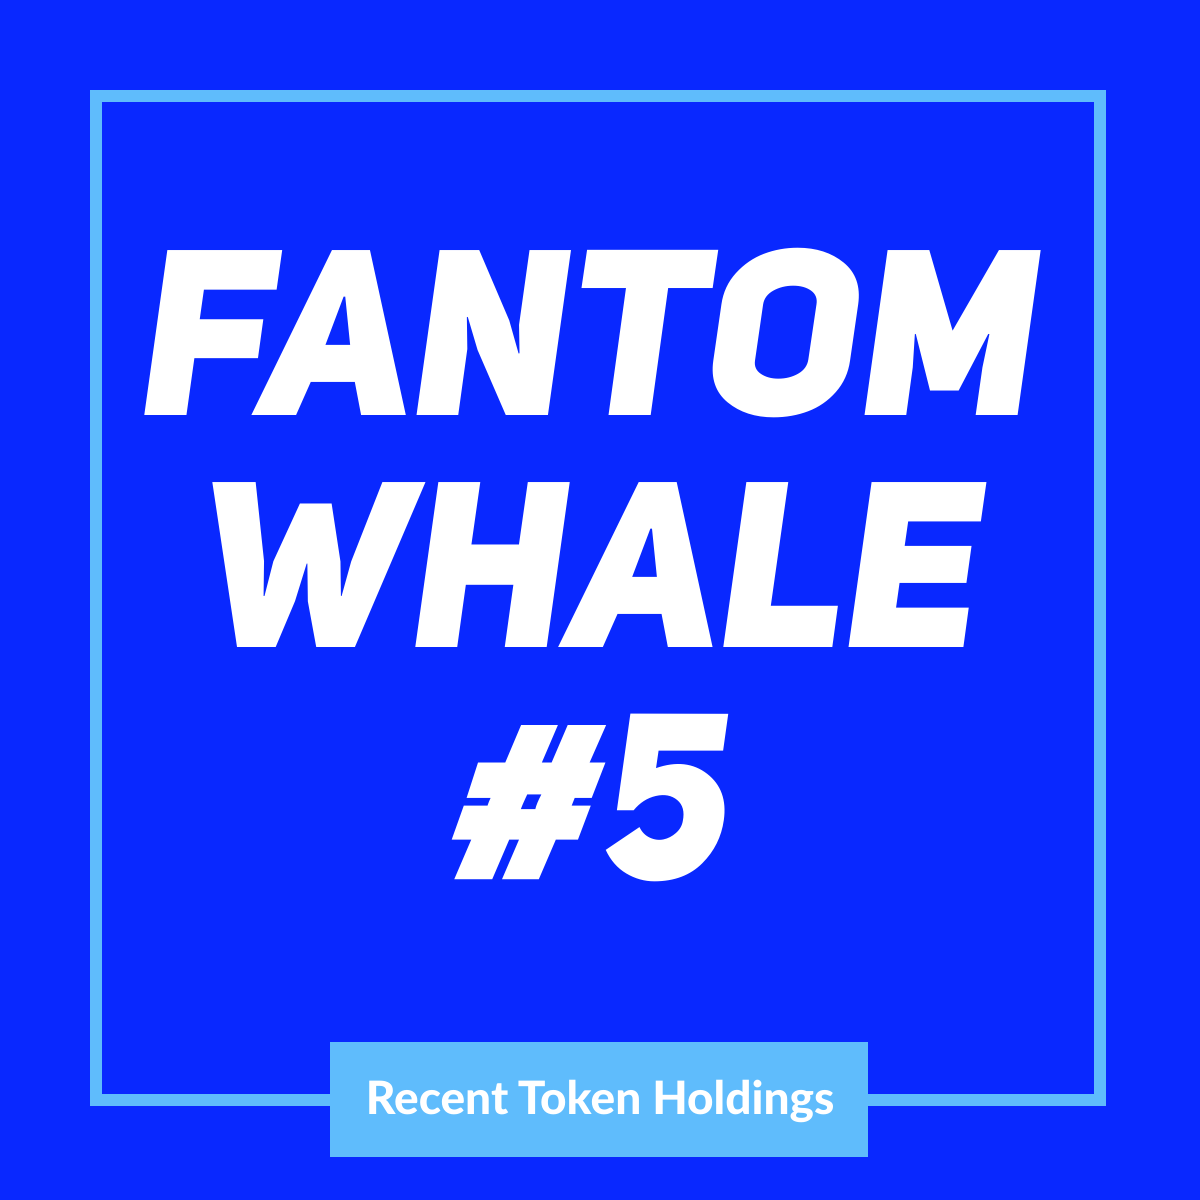 Fantom Whale #5